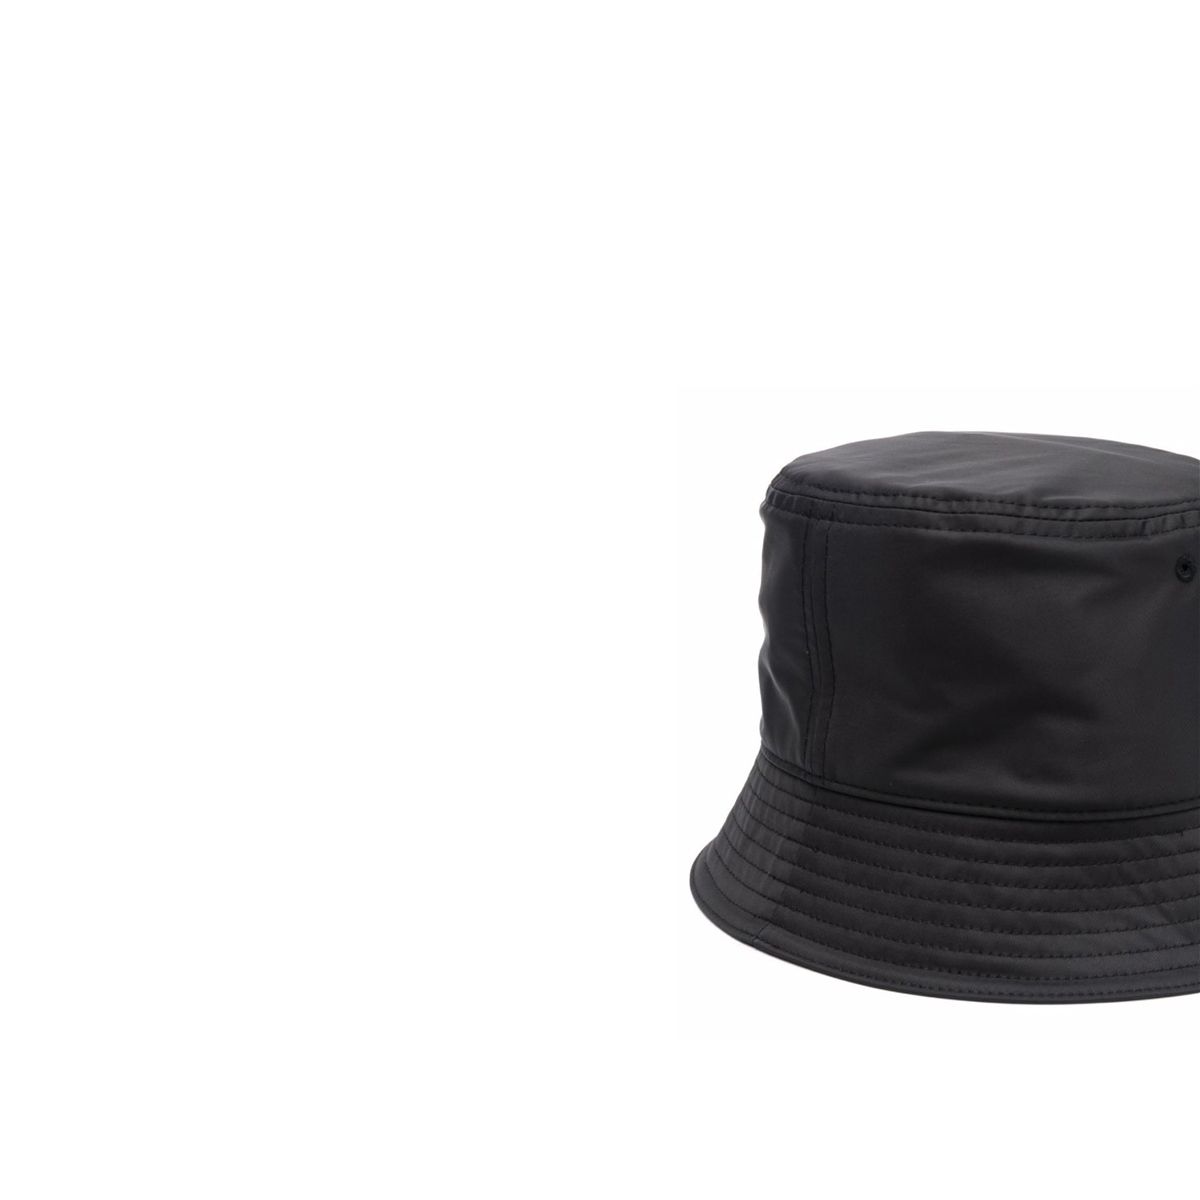 Logo Patch Bucket Hat